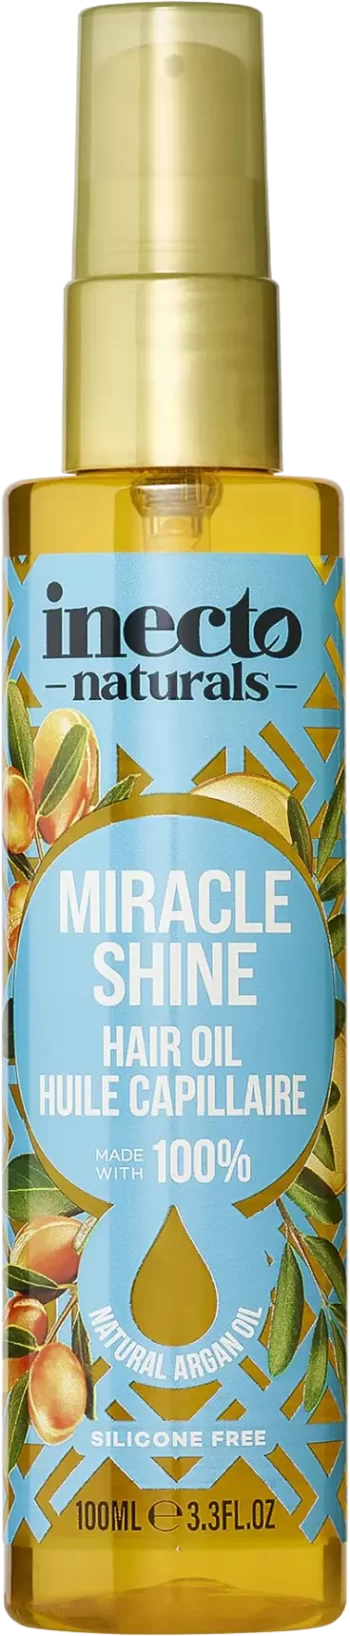 inecto argan miracle shine hair oil 100ml